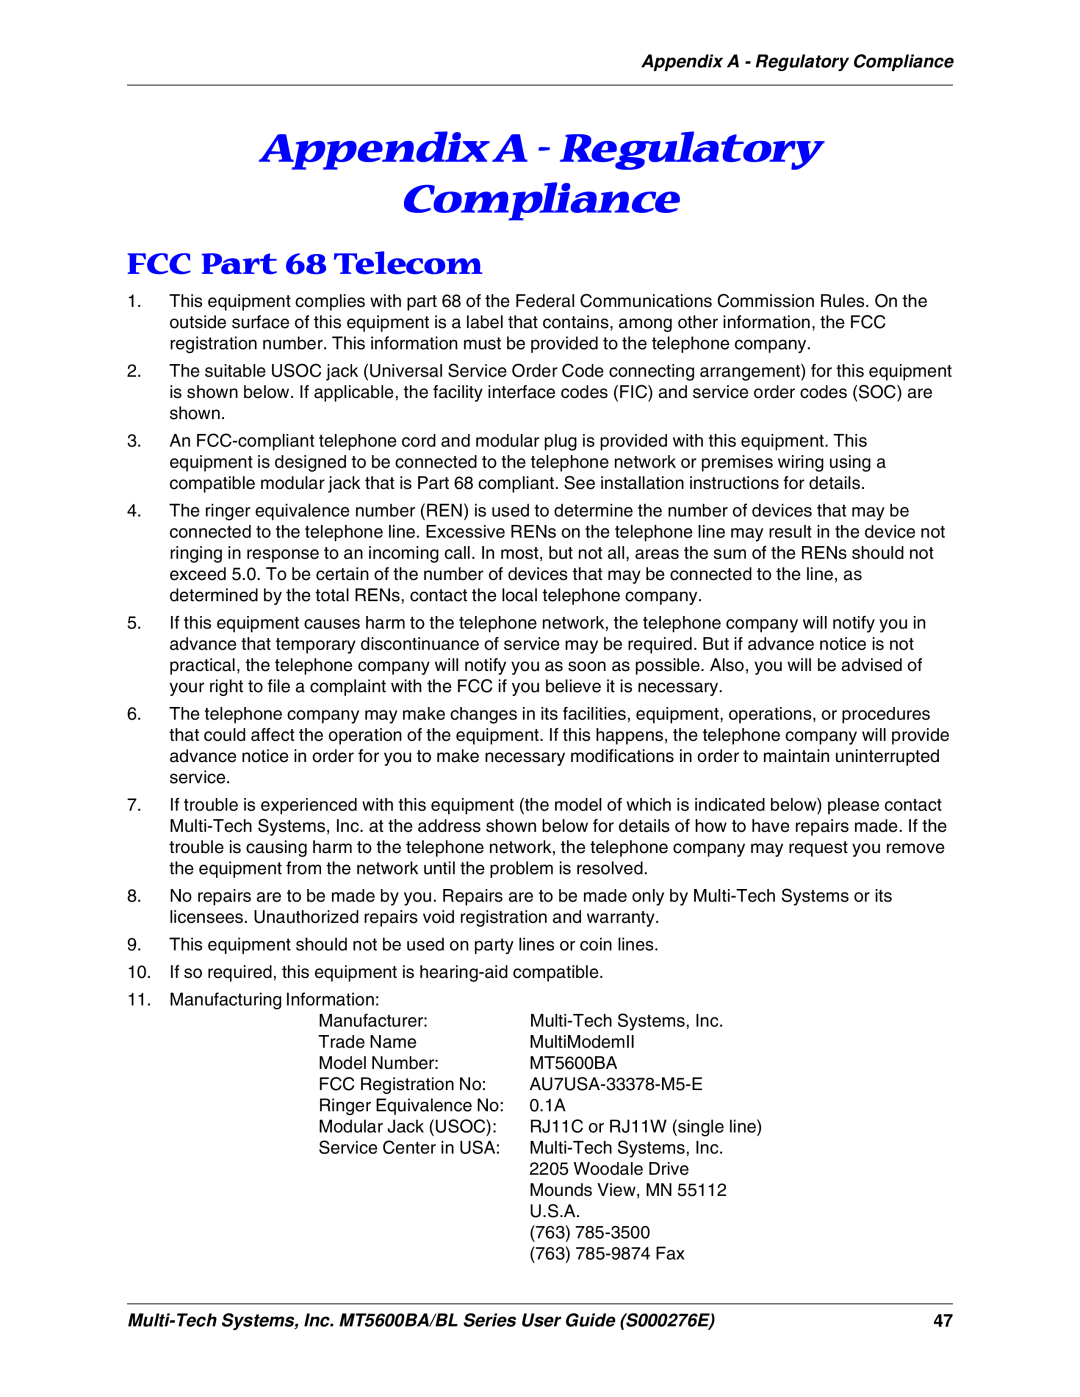 Multitech MT5600BA, MT5600BL manual Appendix A - Regulatory Compliance, FCC Part 68 Telecom 